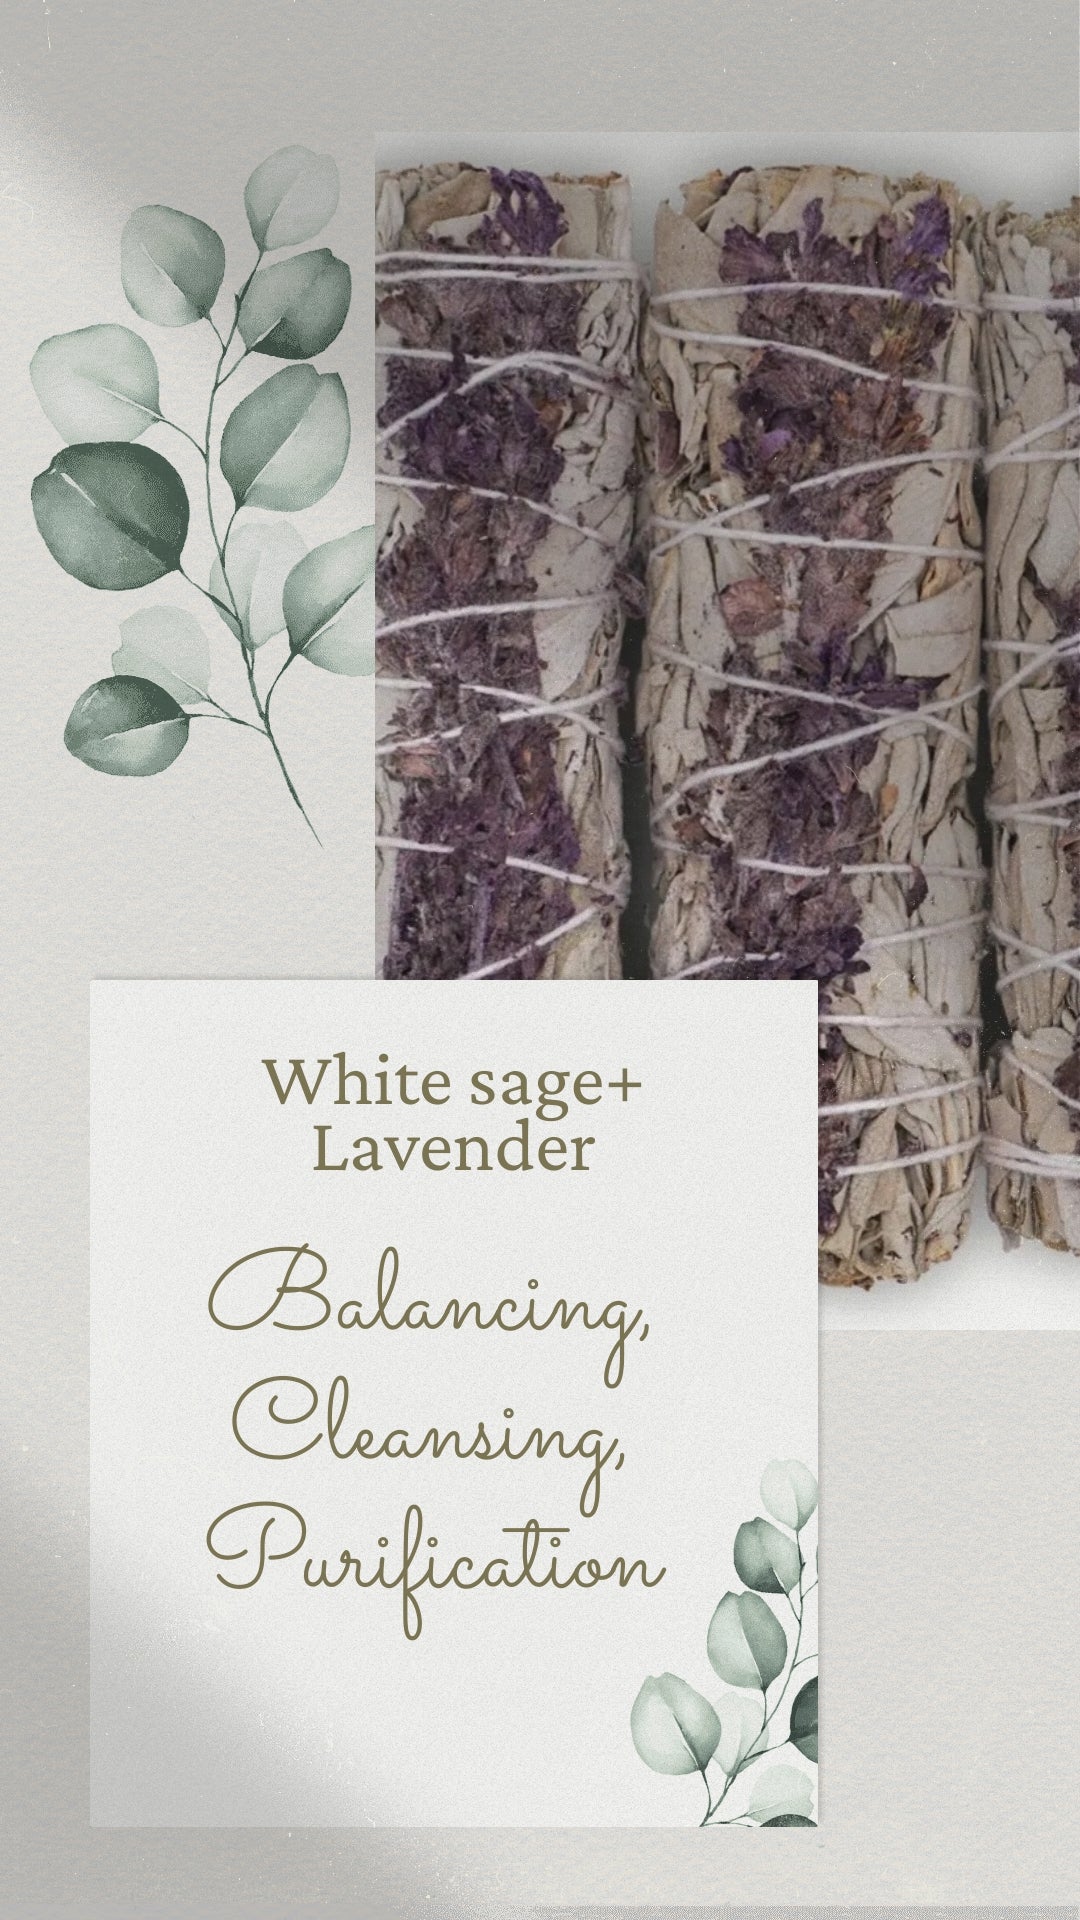 White Sage Smudge Bundle